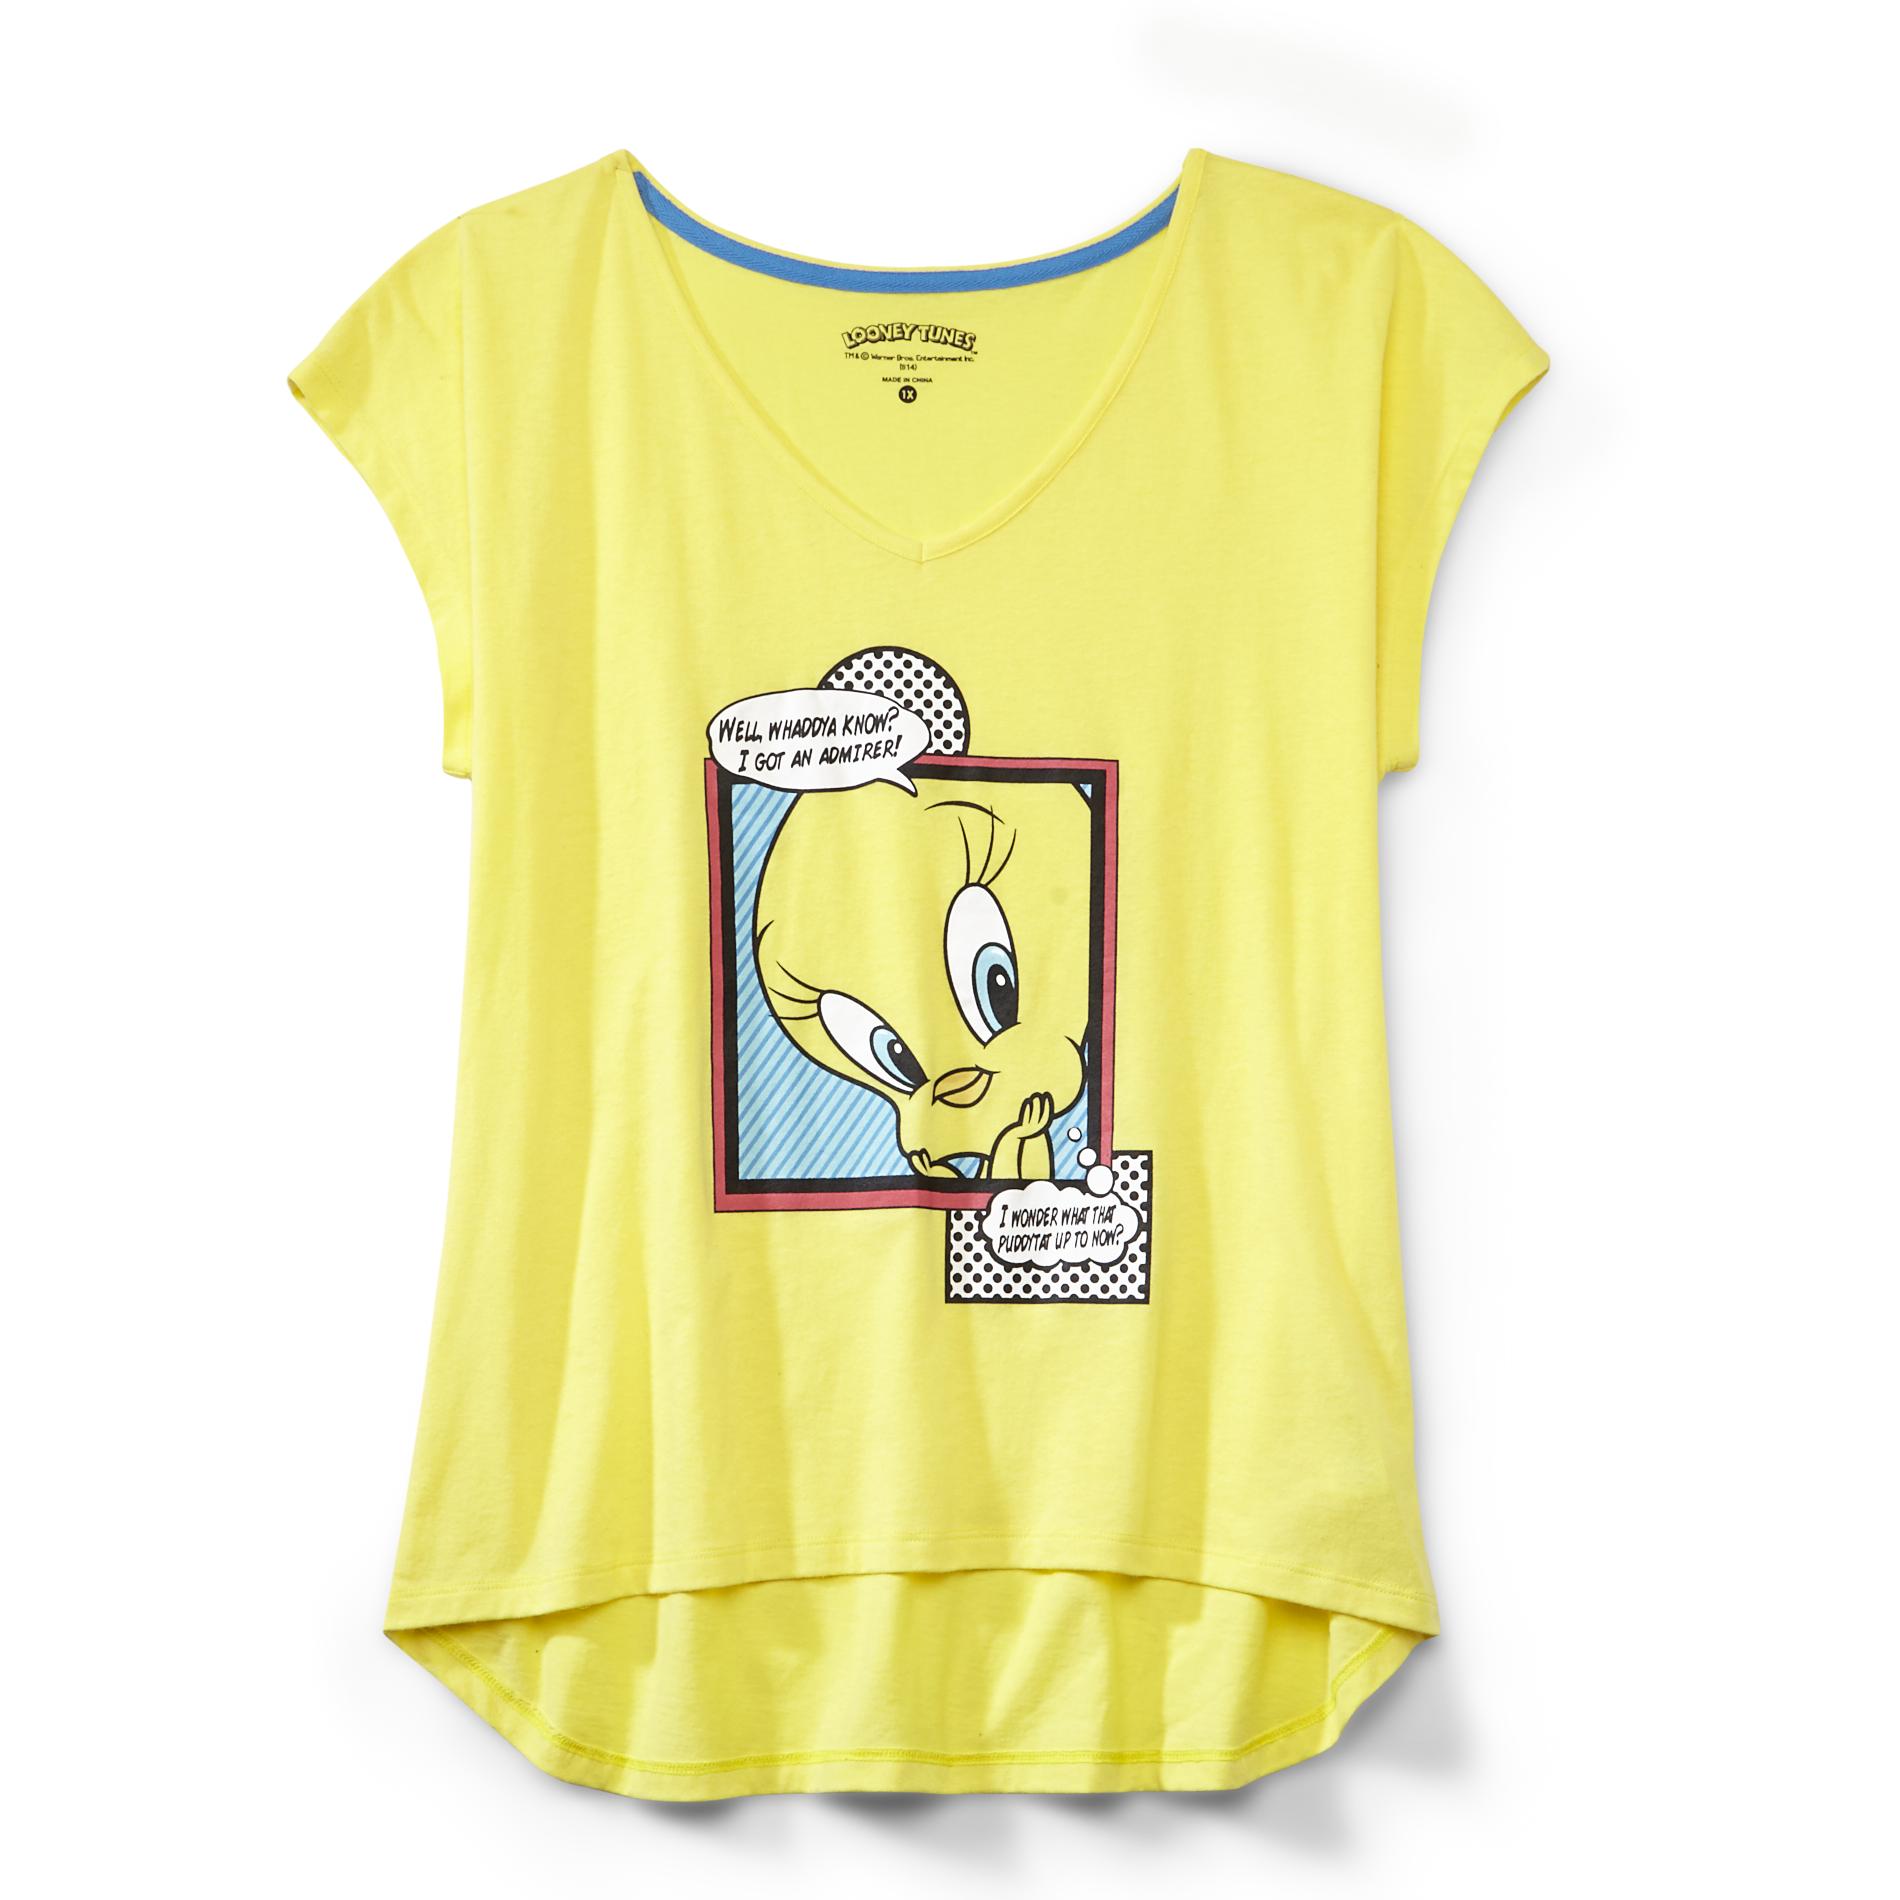 Warner Brothers Women's Graphic Sleep Shirt - Tweety Bird